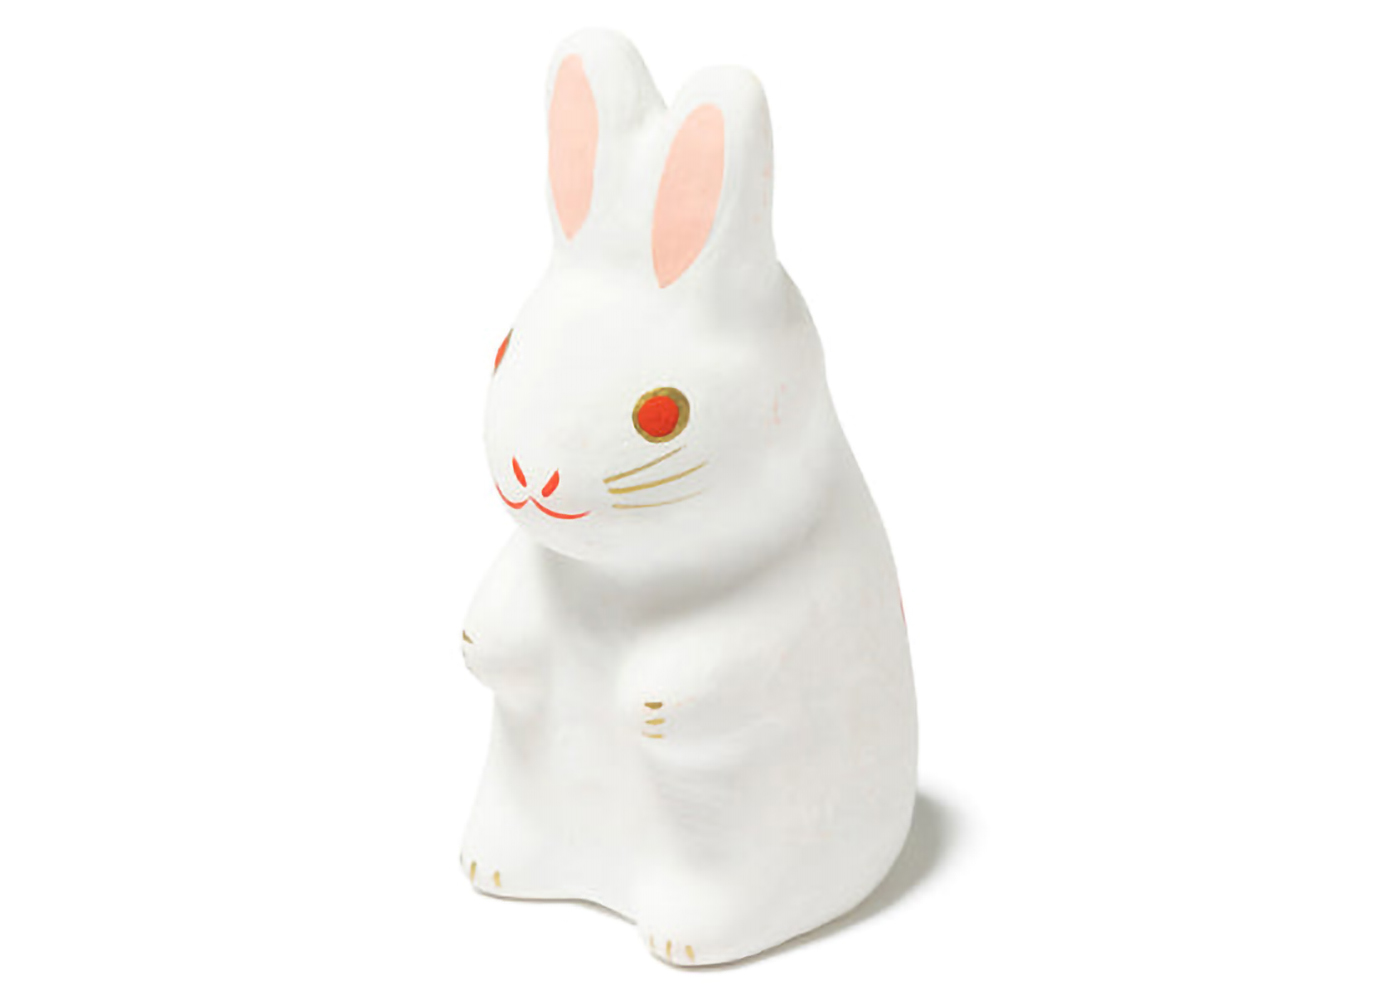 Human Made Rabbit Hariko Small Figure White